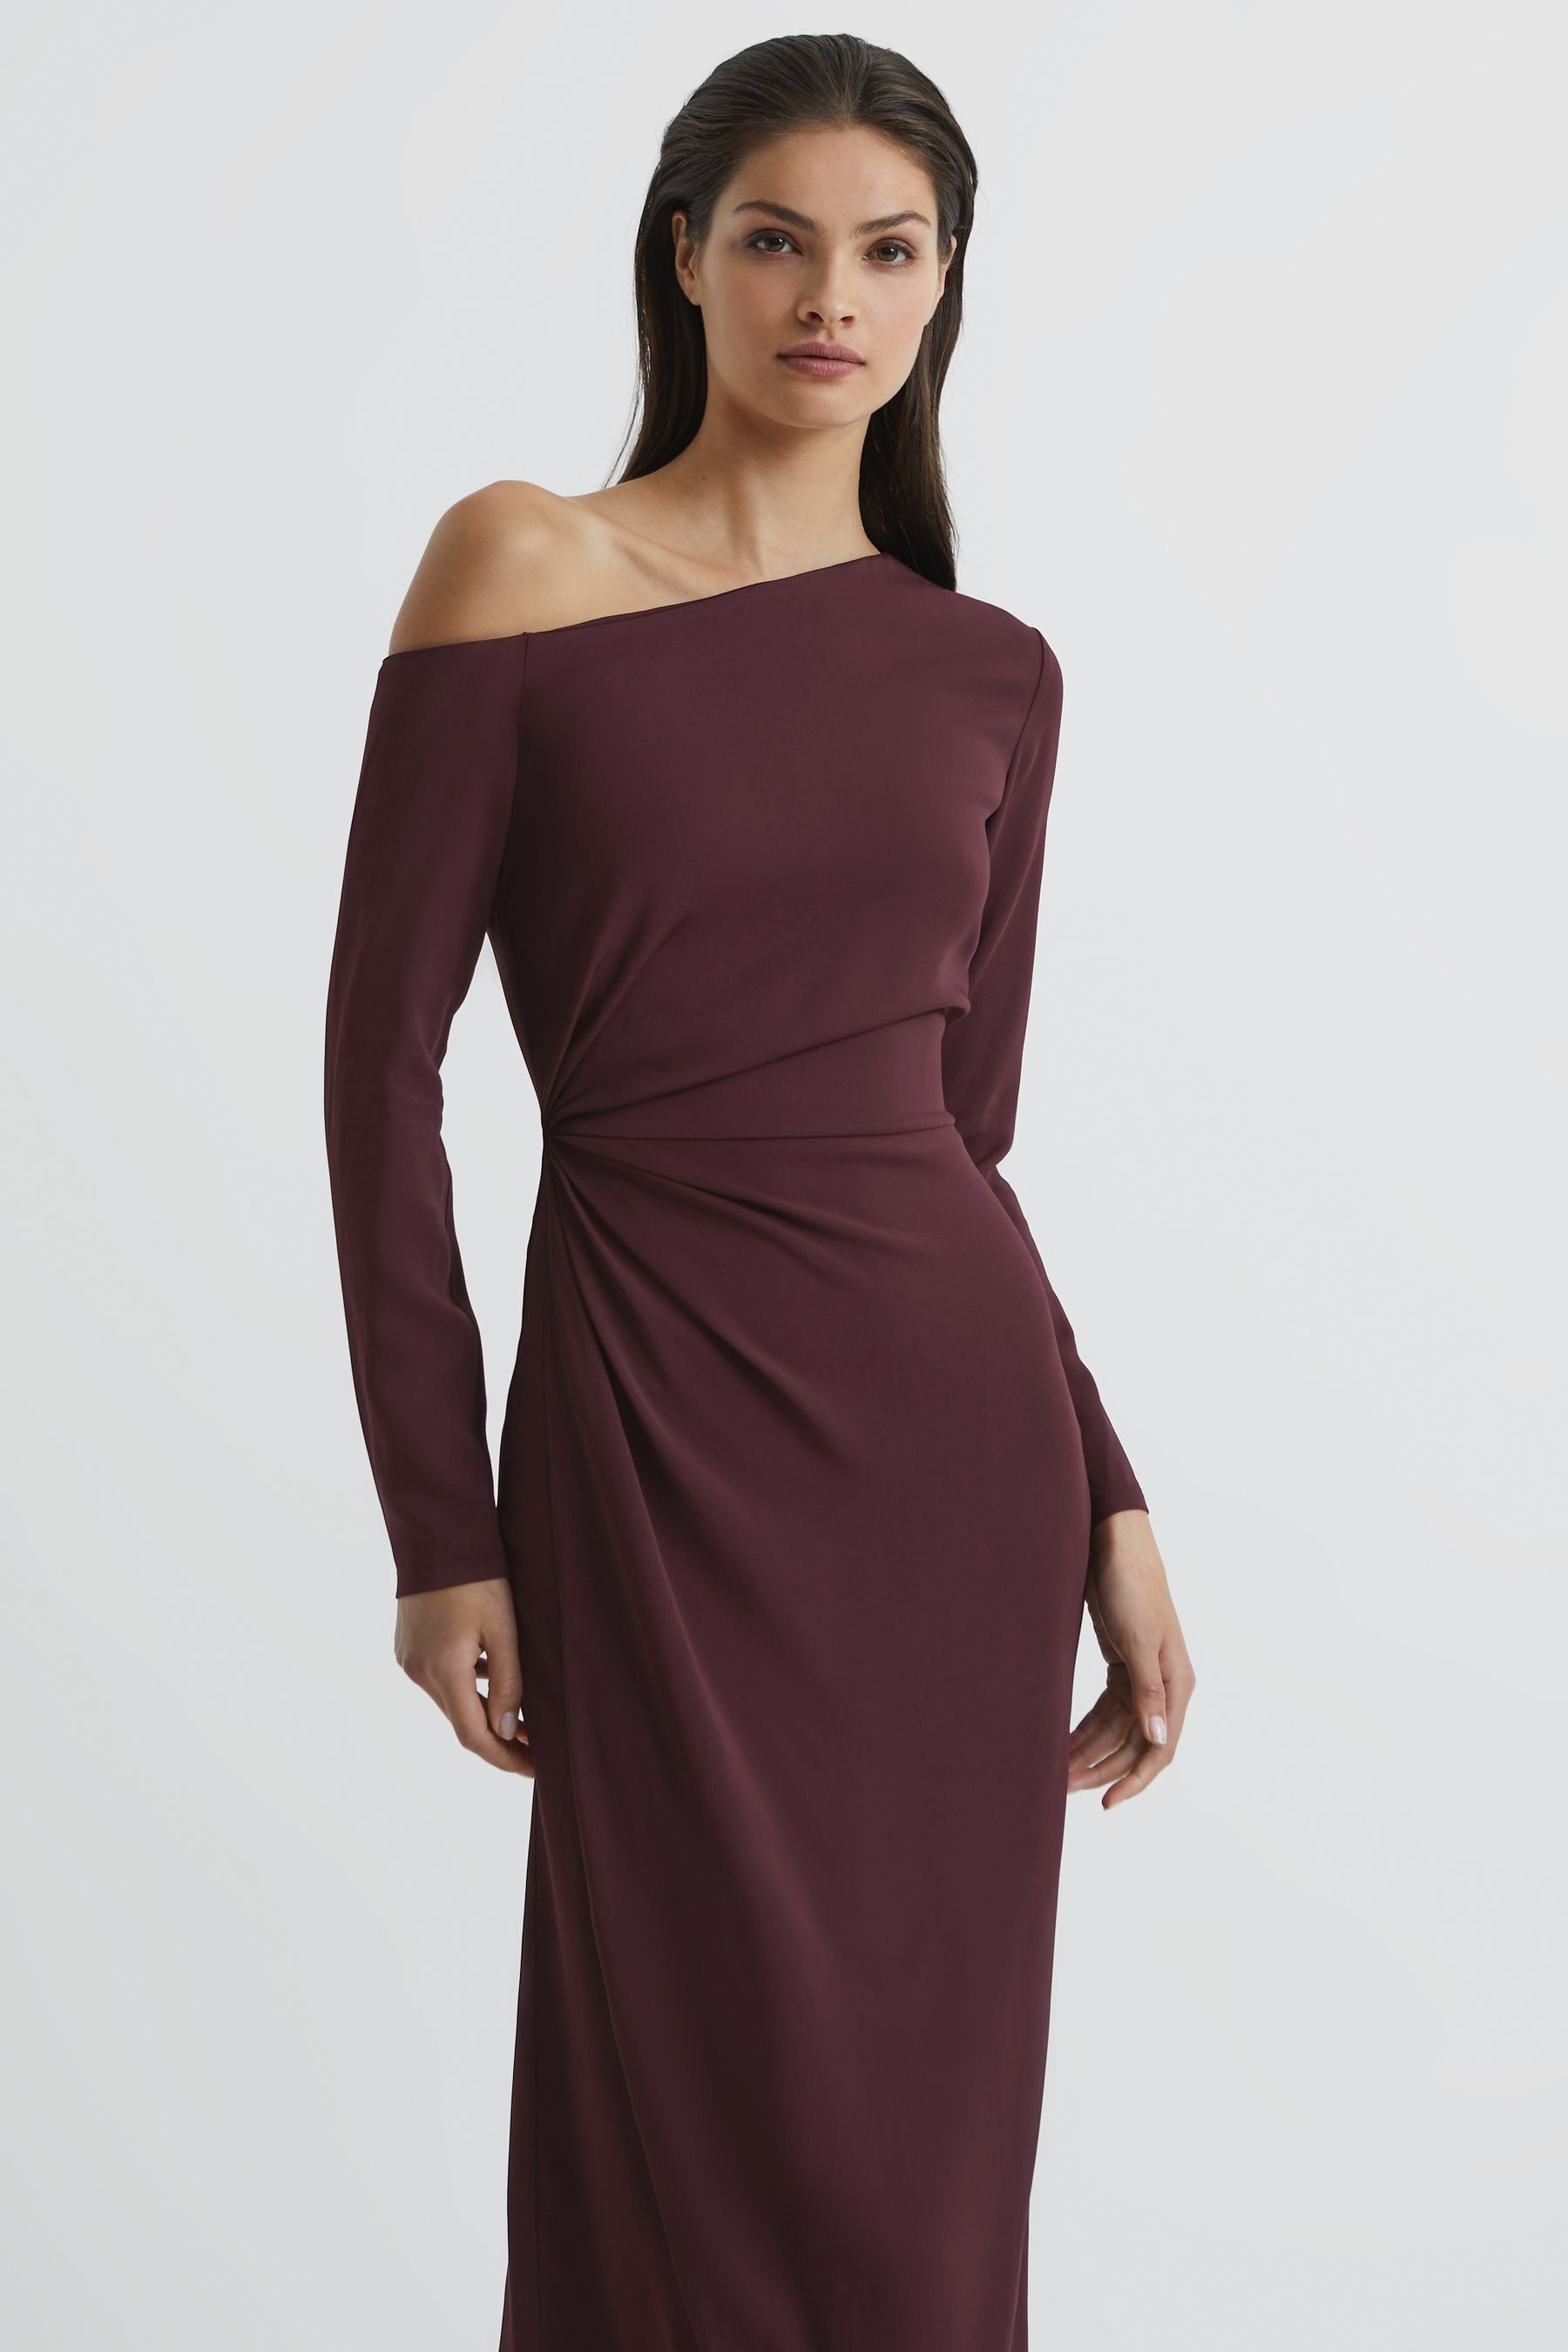 Nadia - Burgundy Off-Shoulder Drape Midi Dress